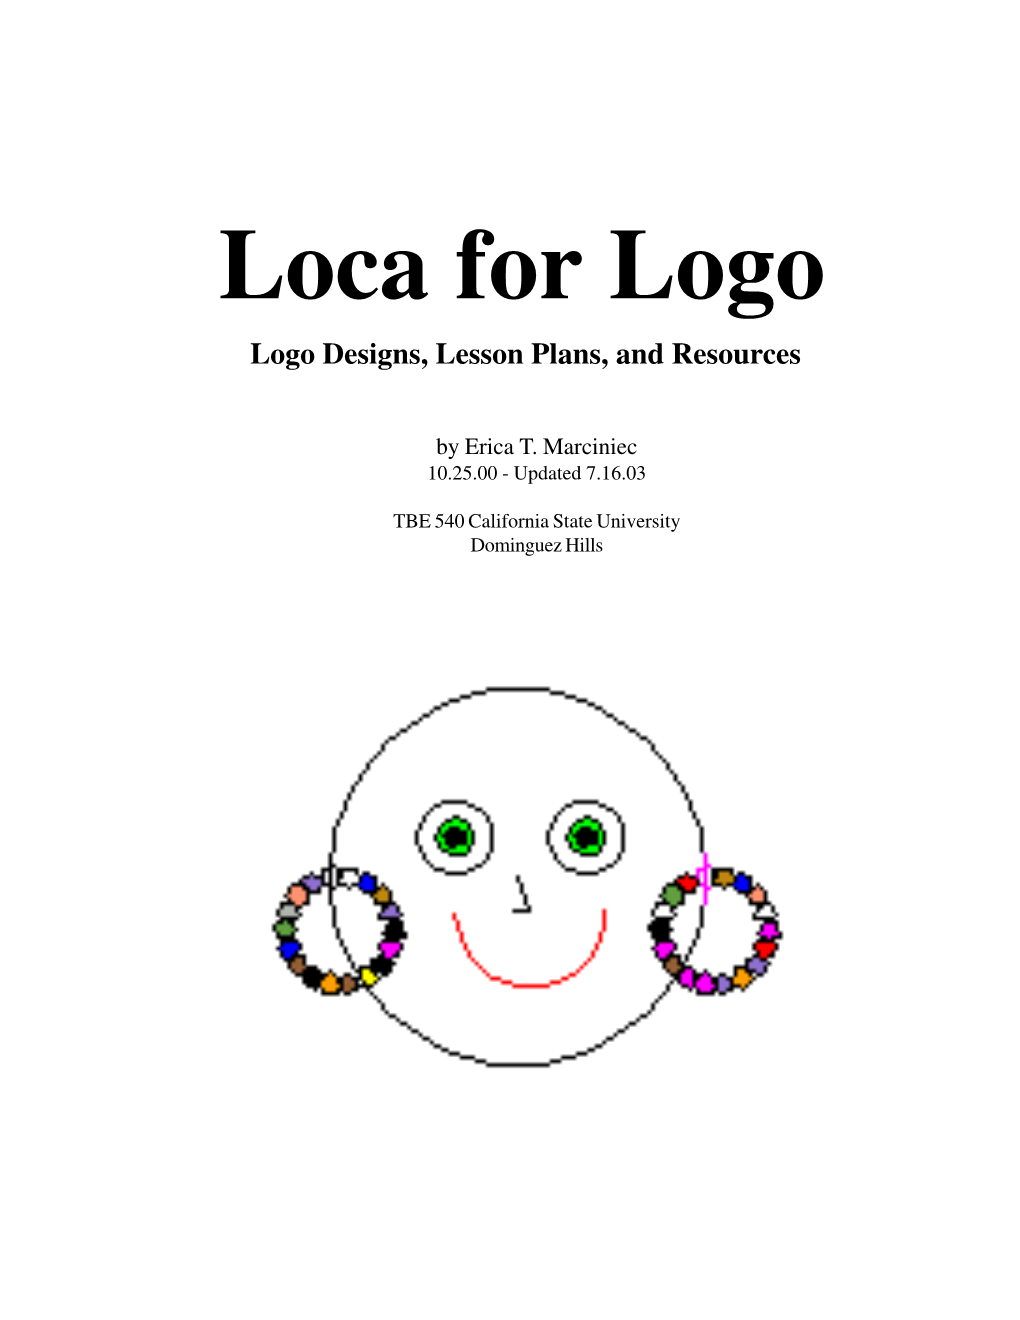 Loca for Logo Logo Designs, Lesson Plans, and Resources